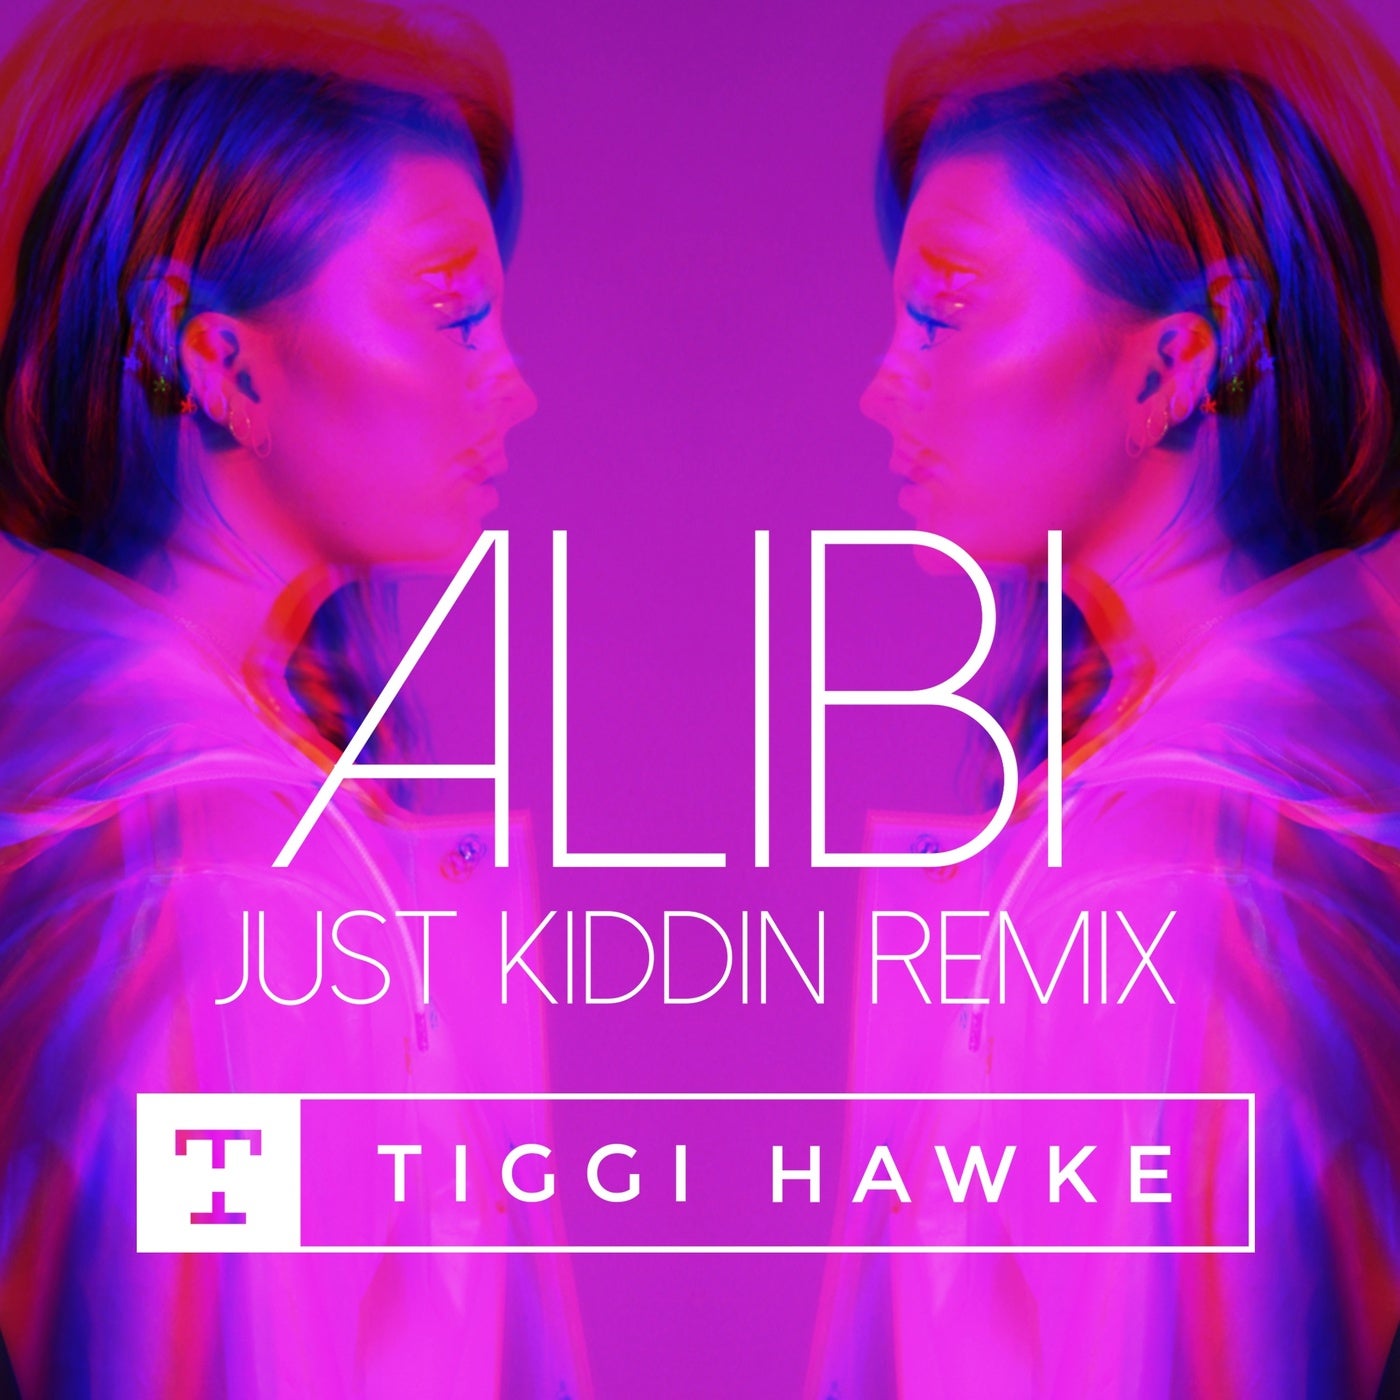 Alibi - Just Kiddin Remix